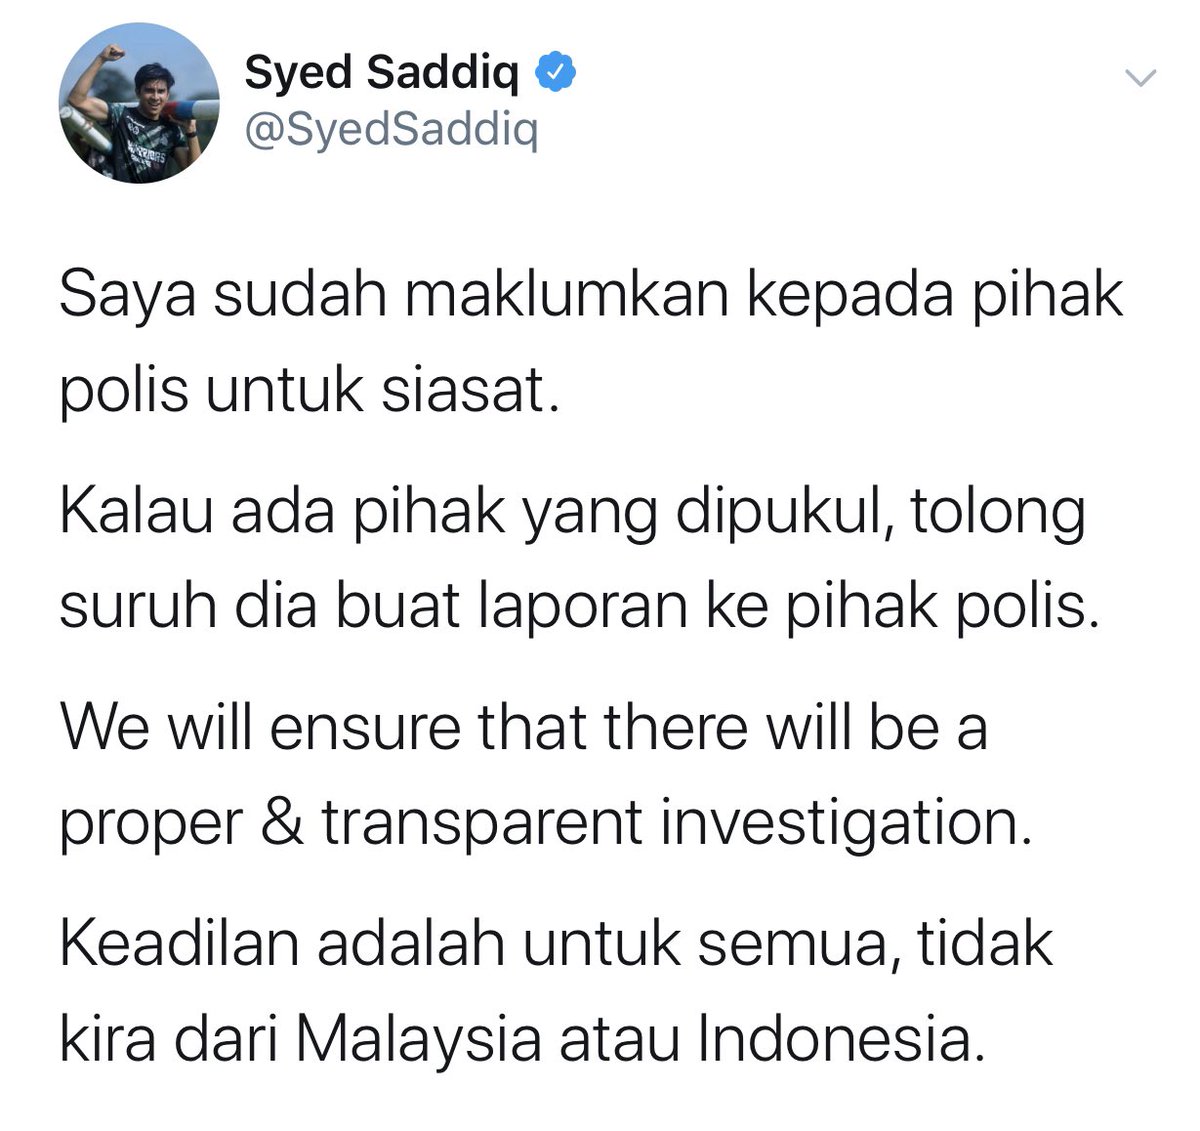 Orang Malay              Orang Indonesia
jadi korban                    jadi korban